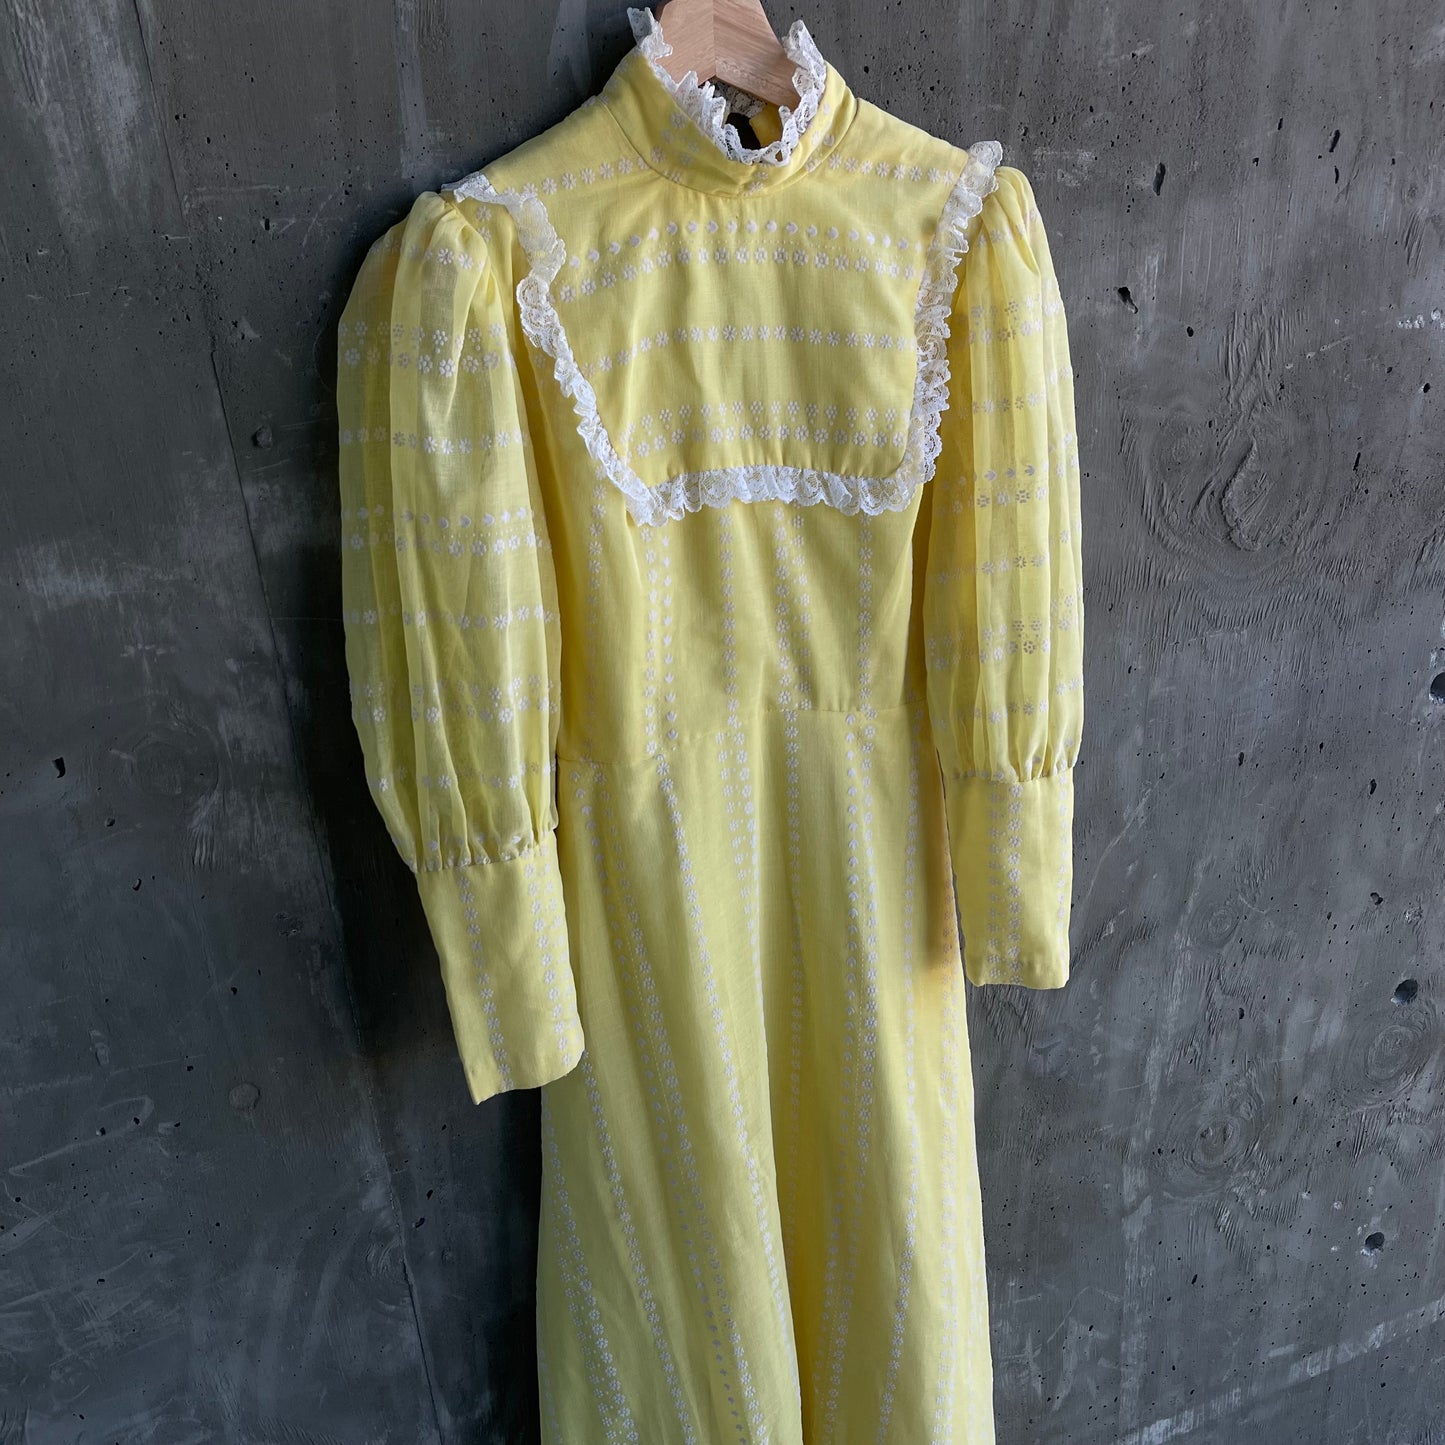 Vintage Prairie Cottagecore Dress